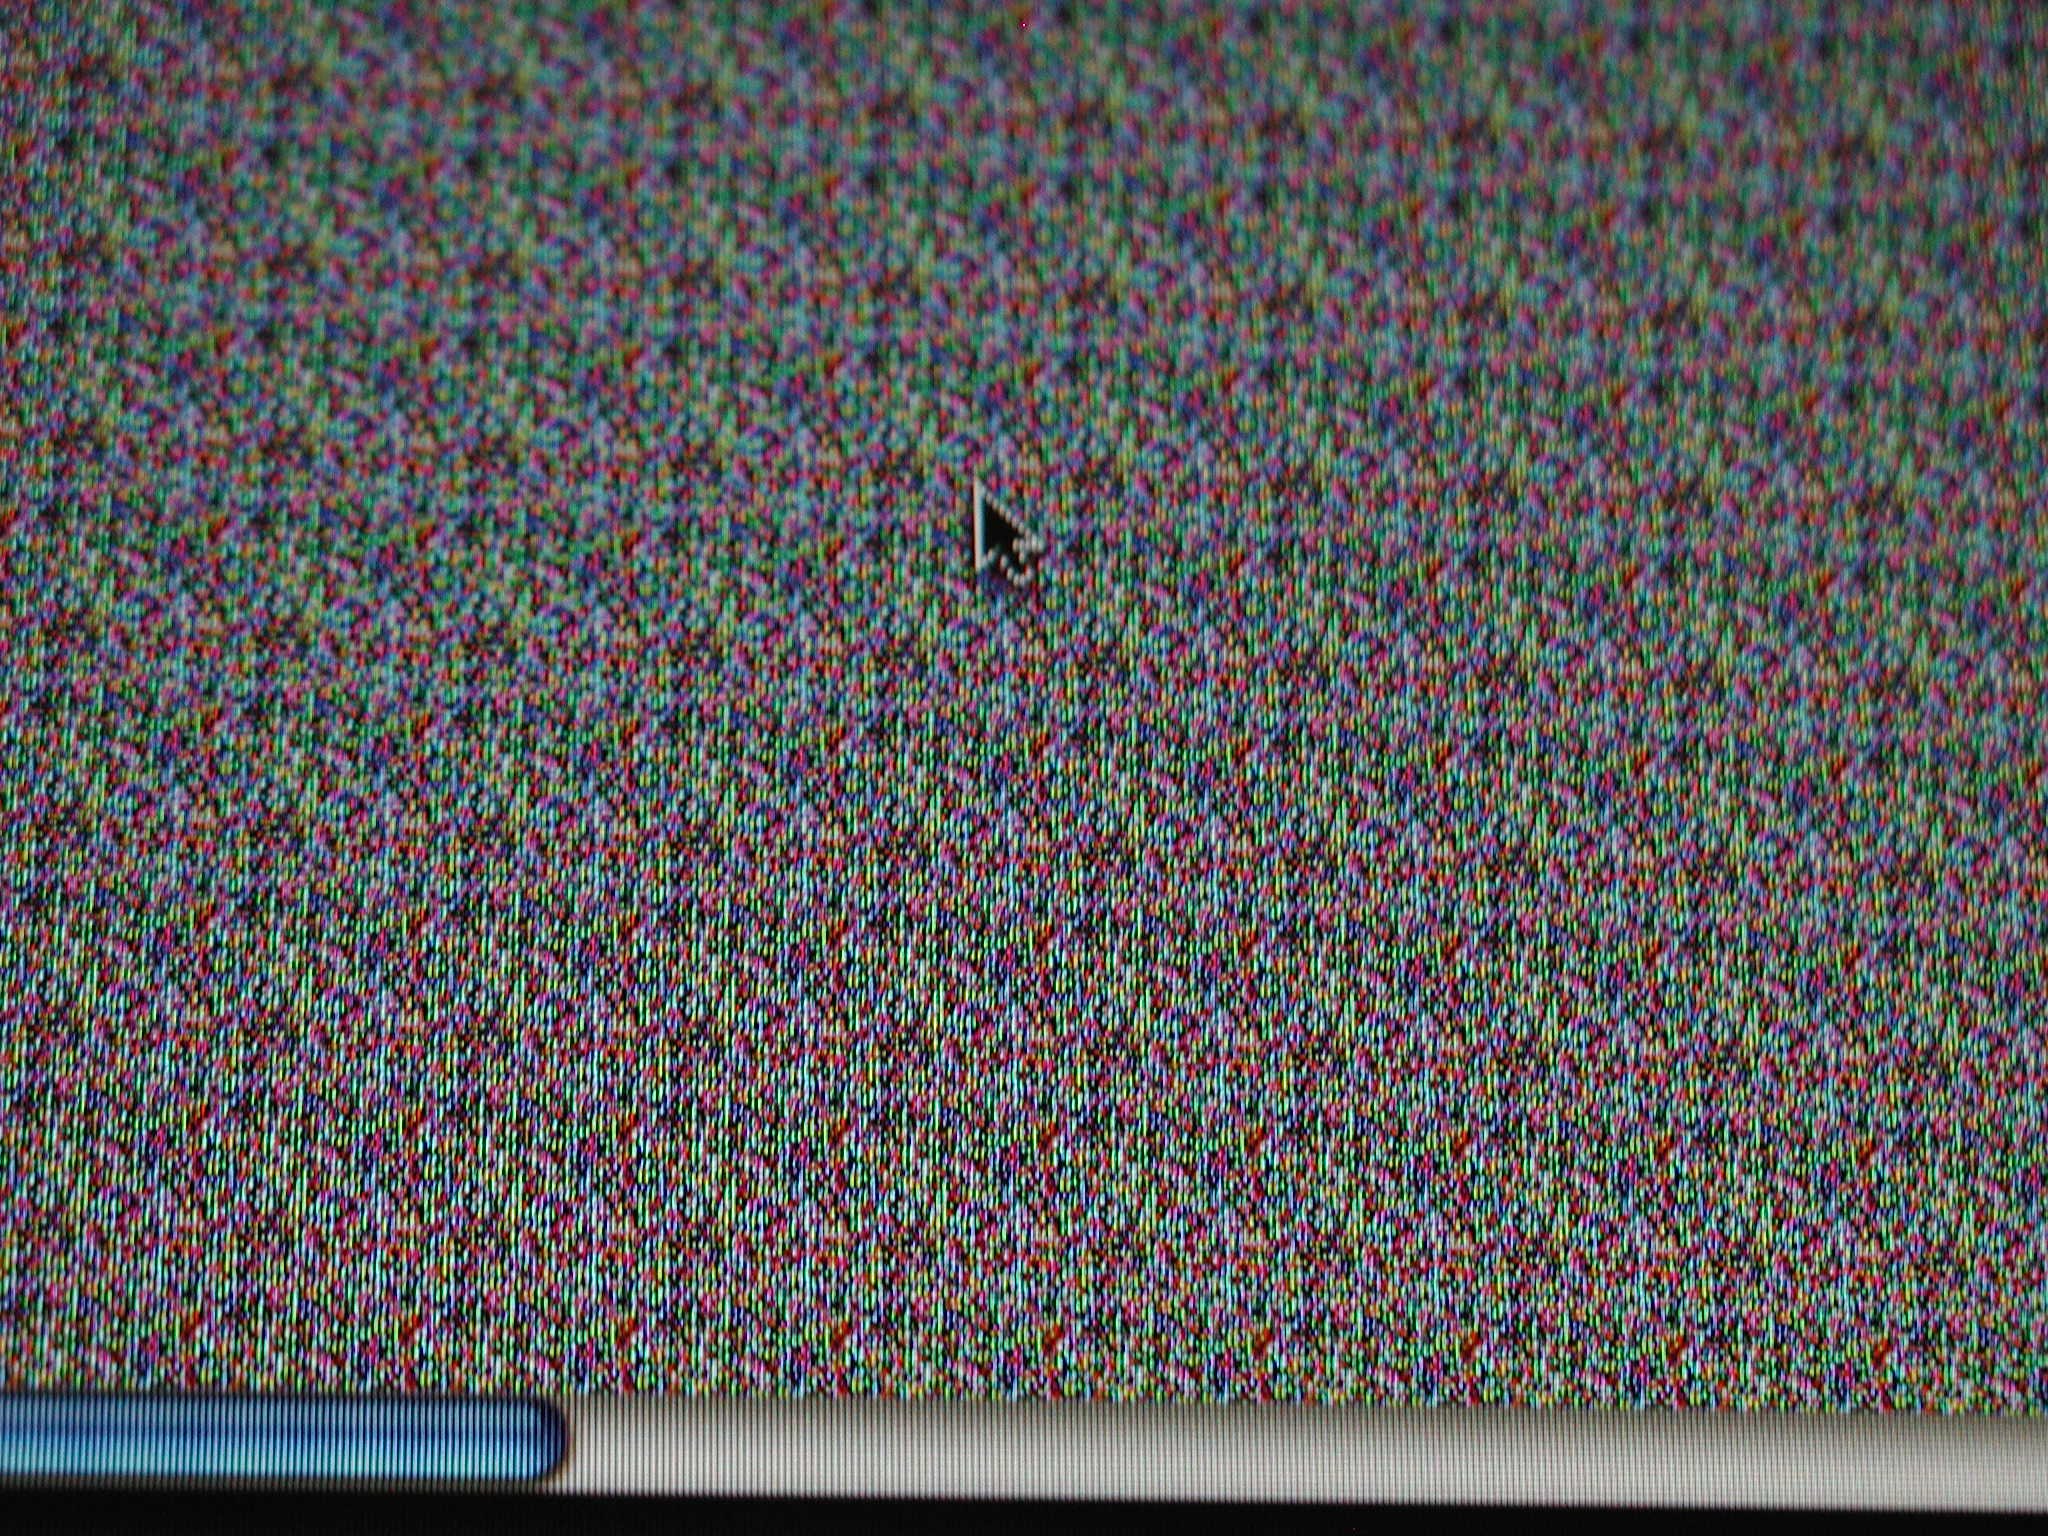 Движущаяся точка на экране. Пиксели на телевизоре. Пиксели на мониторе. Битые пиксели. Разноцветные точки на и кране.